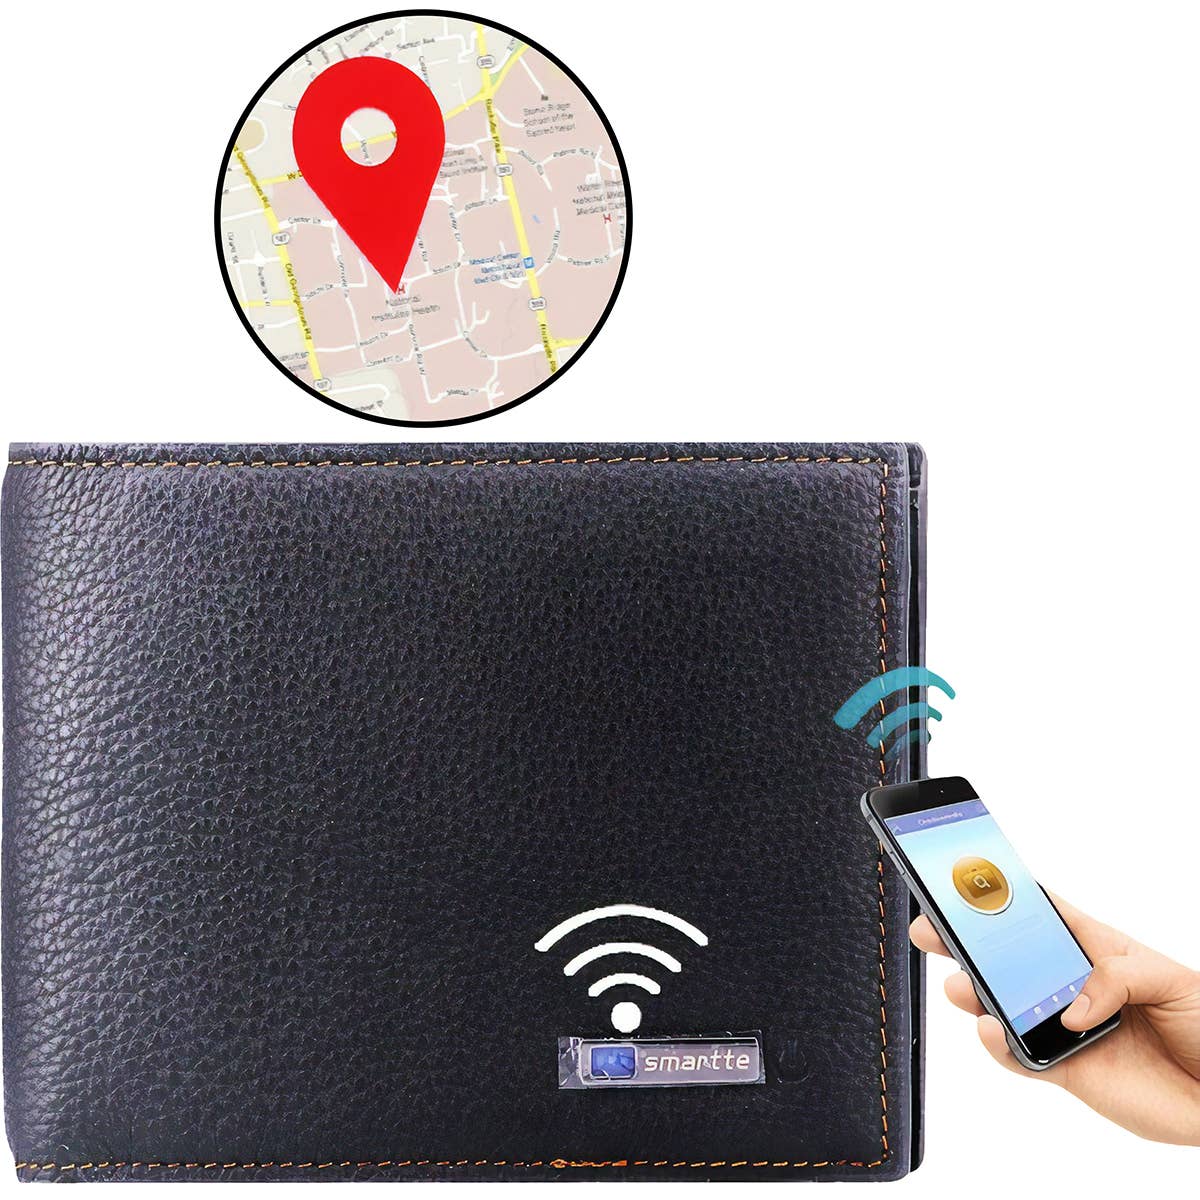 Mad Man - Bluetooth Tracker Wallet